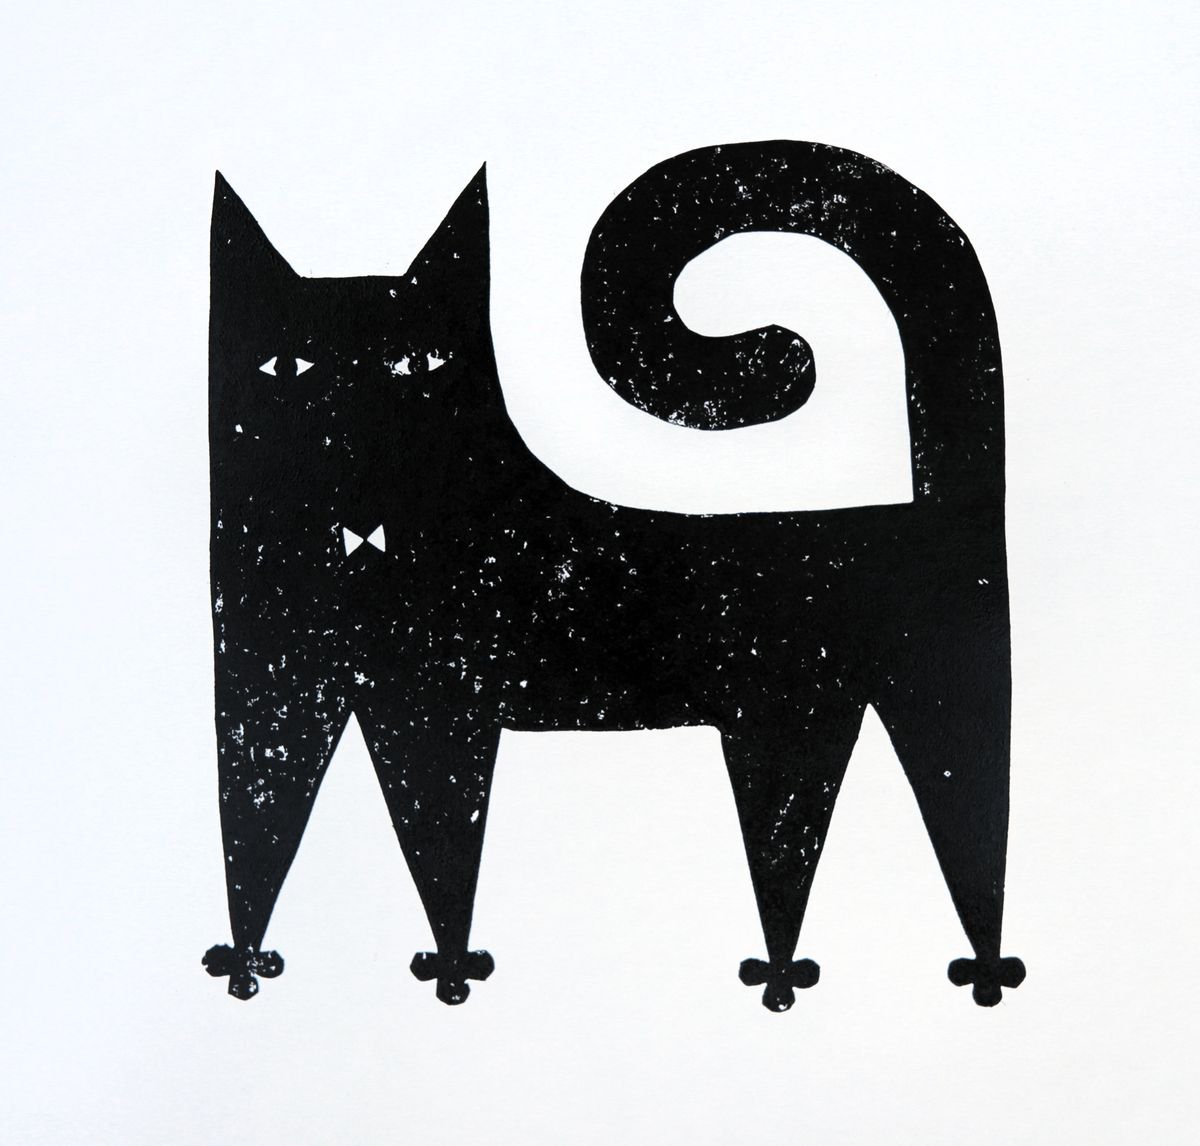 Black Cat by Anna Grincuka